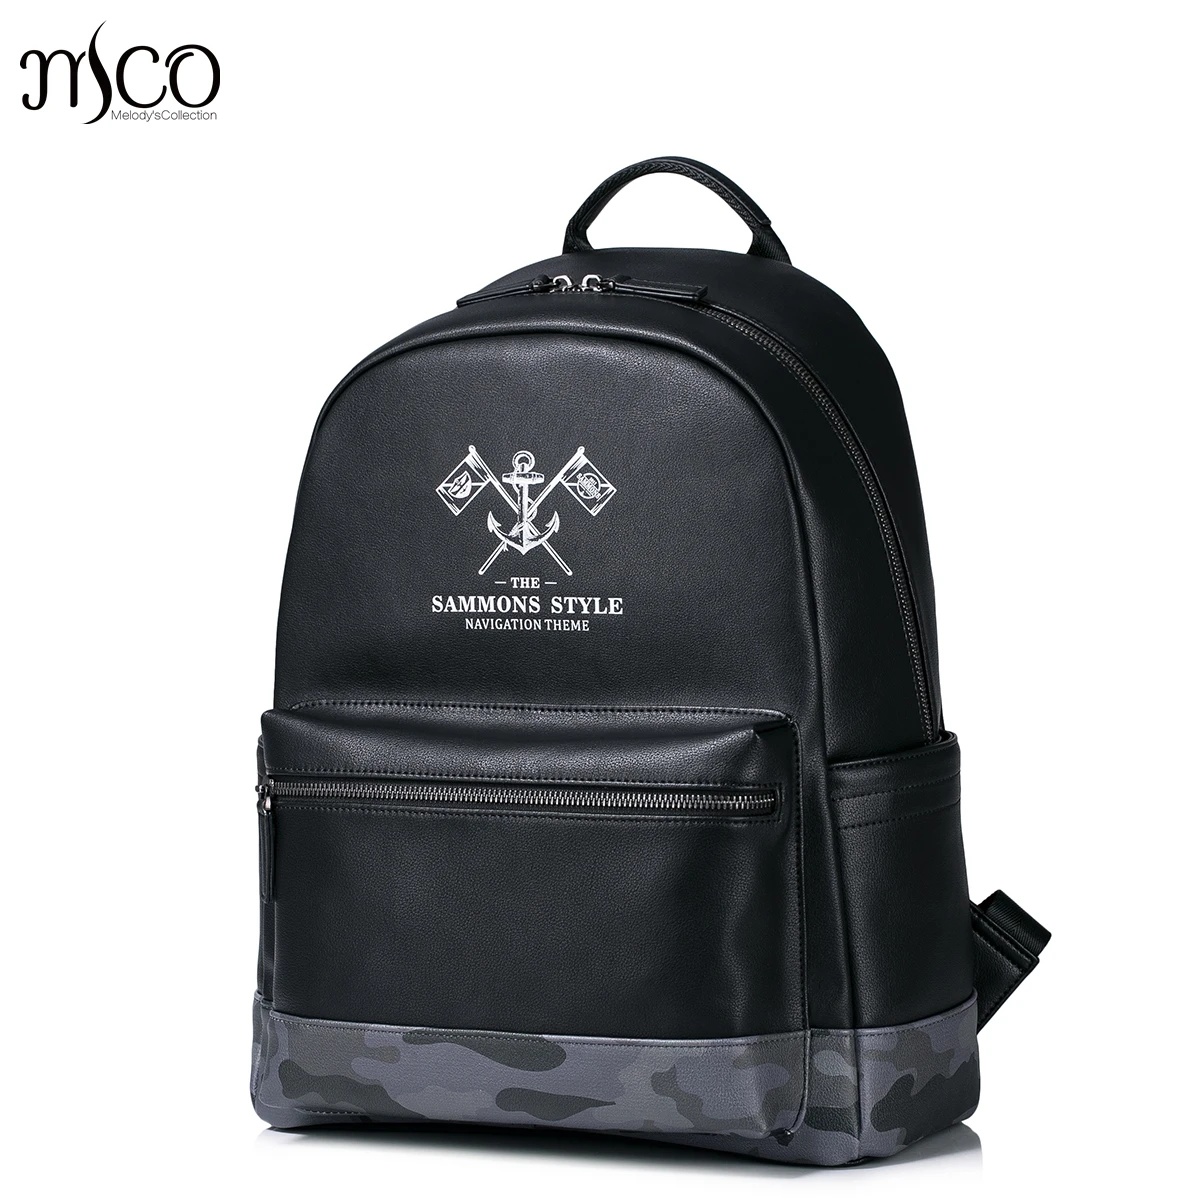 Navigation Design Zipper Bag Men Daily Backpack Leather Business Casual Travel Bags Daypack bags Tote bags Retro Rucksack